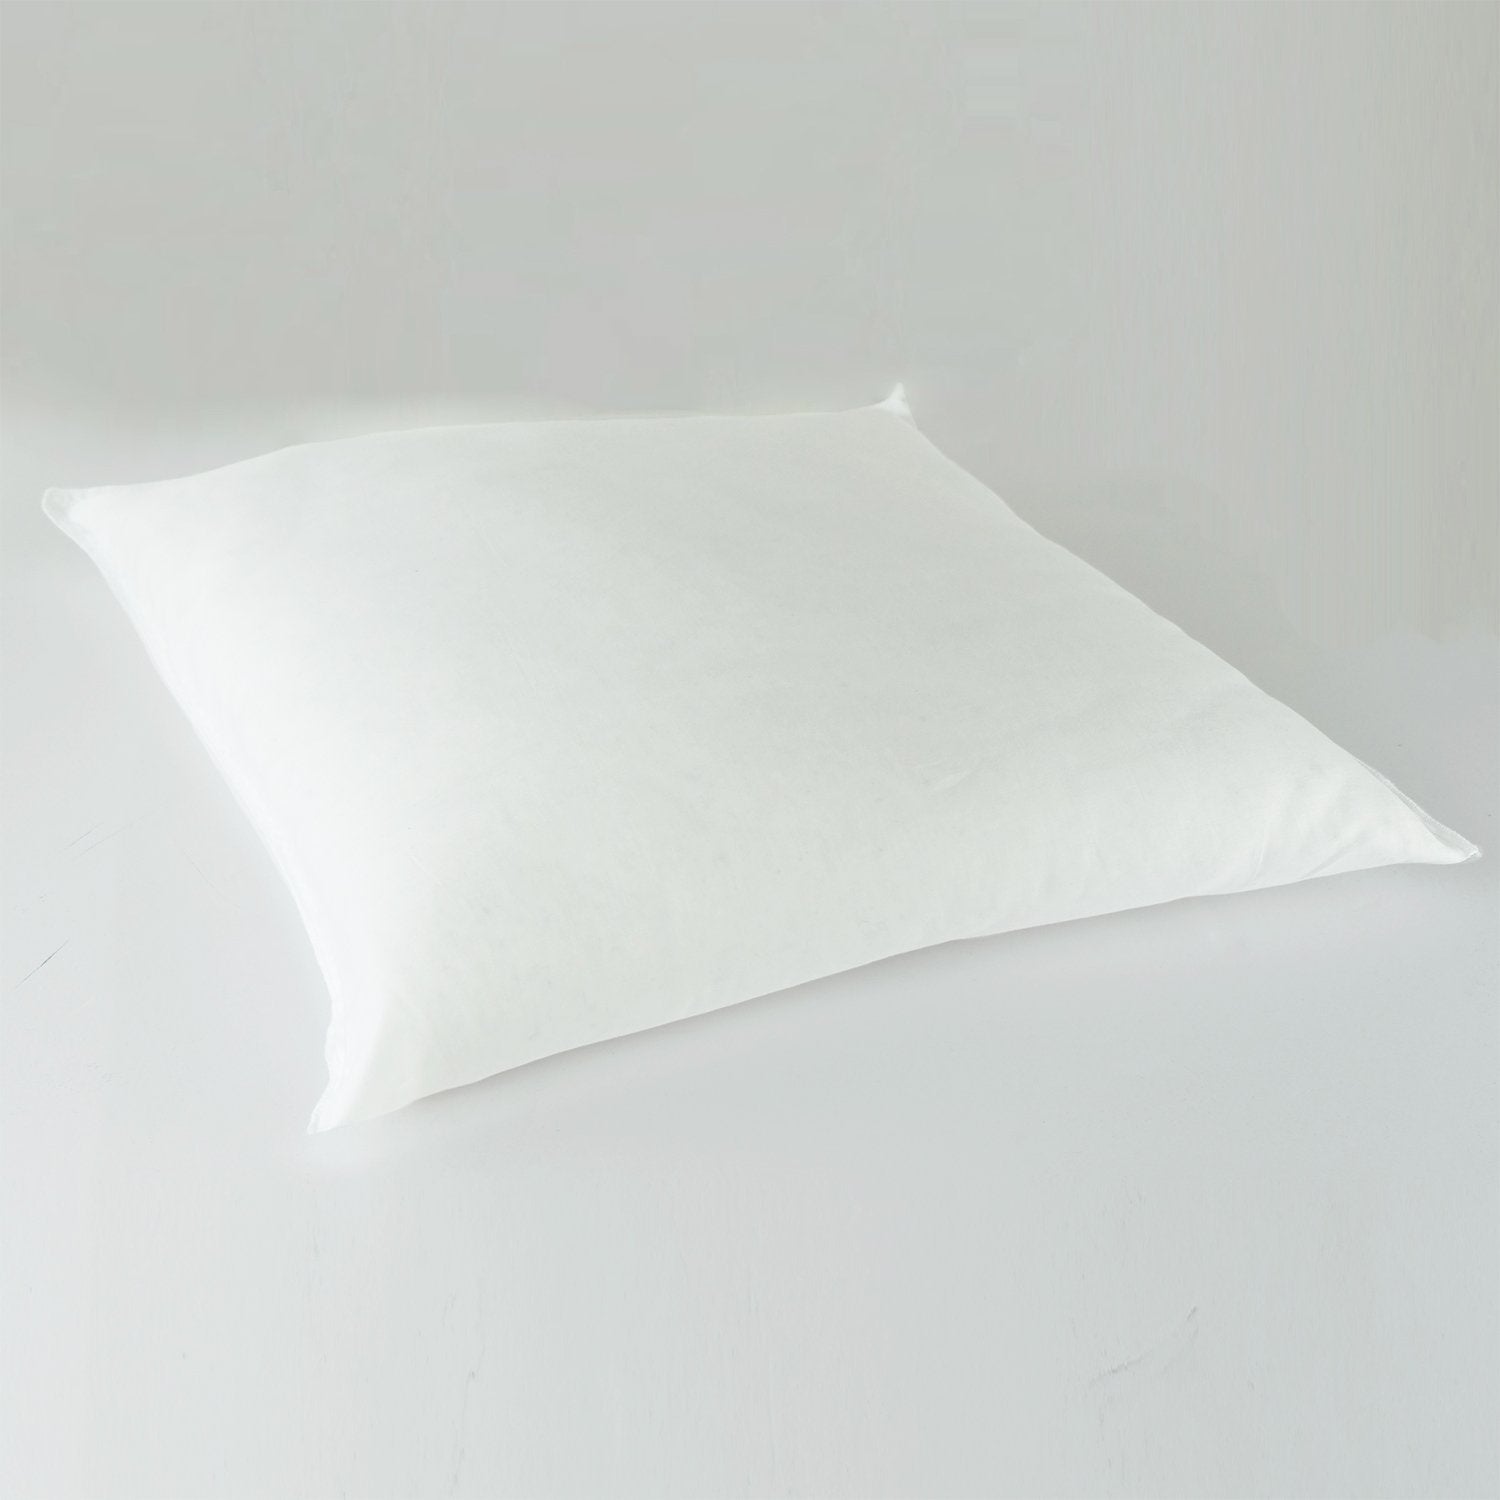 J-Life Nami Red Zabuton Floor Pillow_Pillows & Shams_Zabuton Floor Pillows_100% Cotton_Reversible